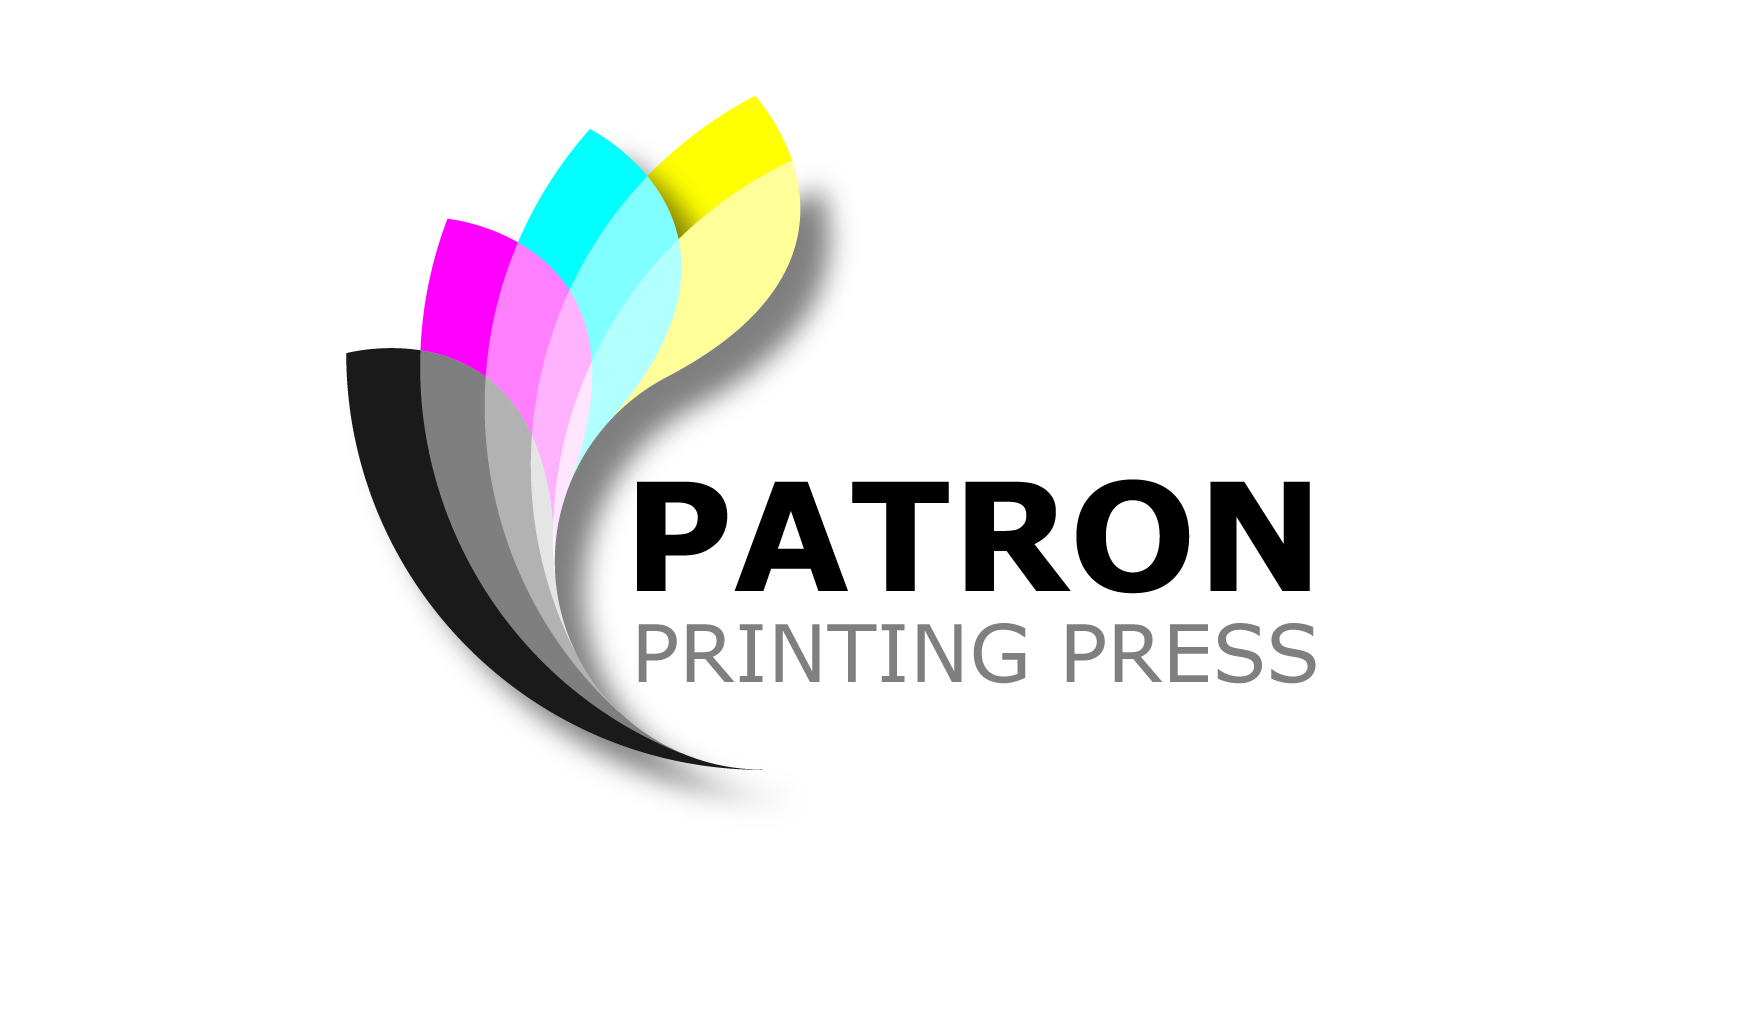 Digital printing company logo design for media Vector Image